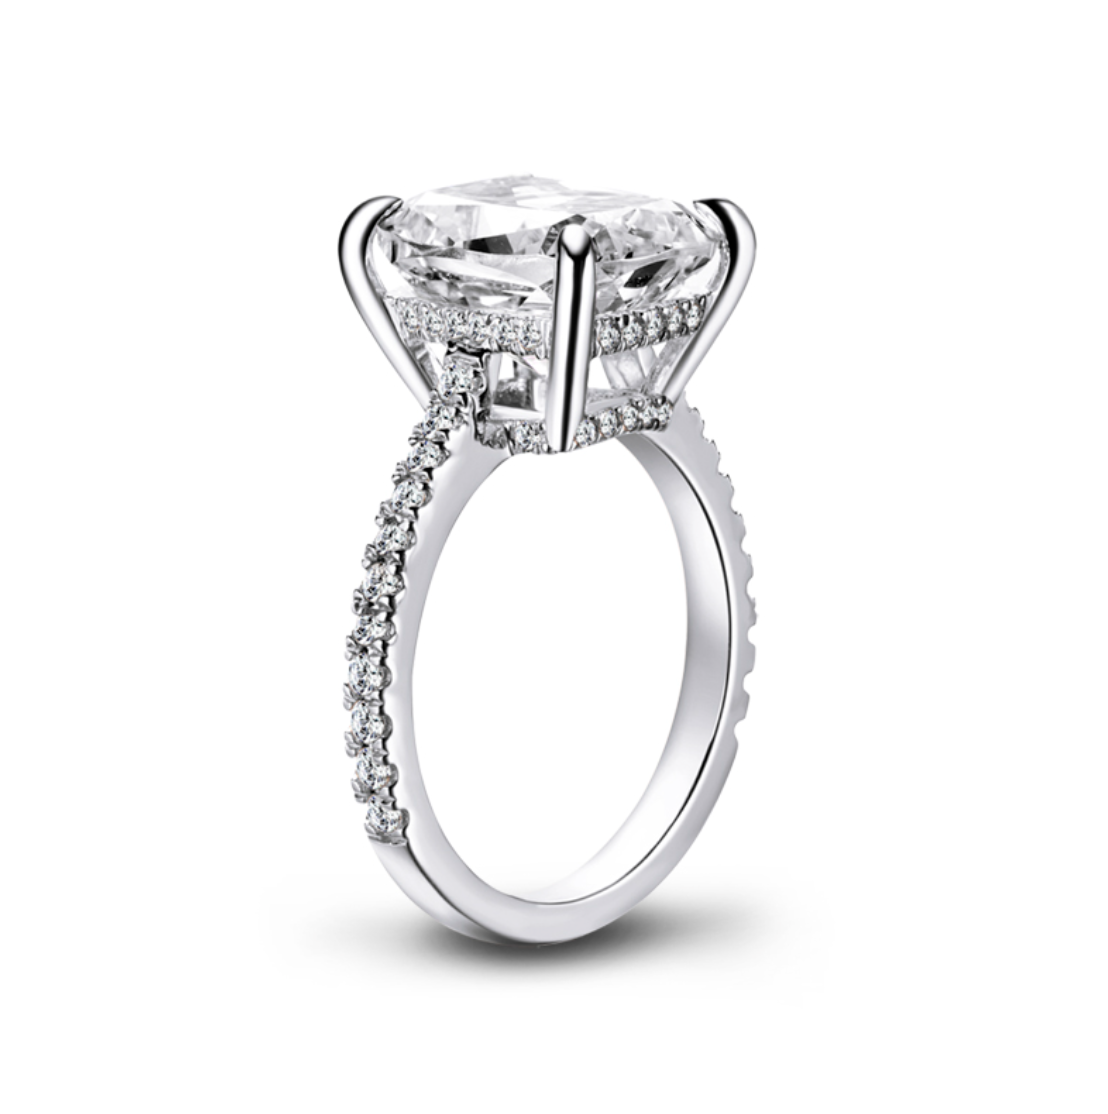 Cushion Cut Engagement Ring, Cushion Cut Ring, Cushion Cut Diamond Ring For Women, Cushion Cut Engagement Ring, 6 carat ring, Cushion Cut promise ring